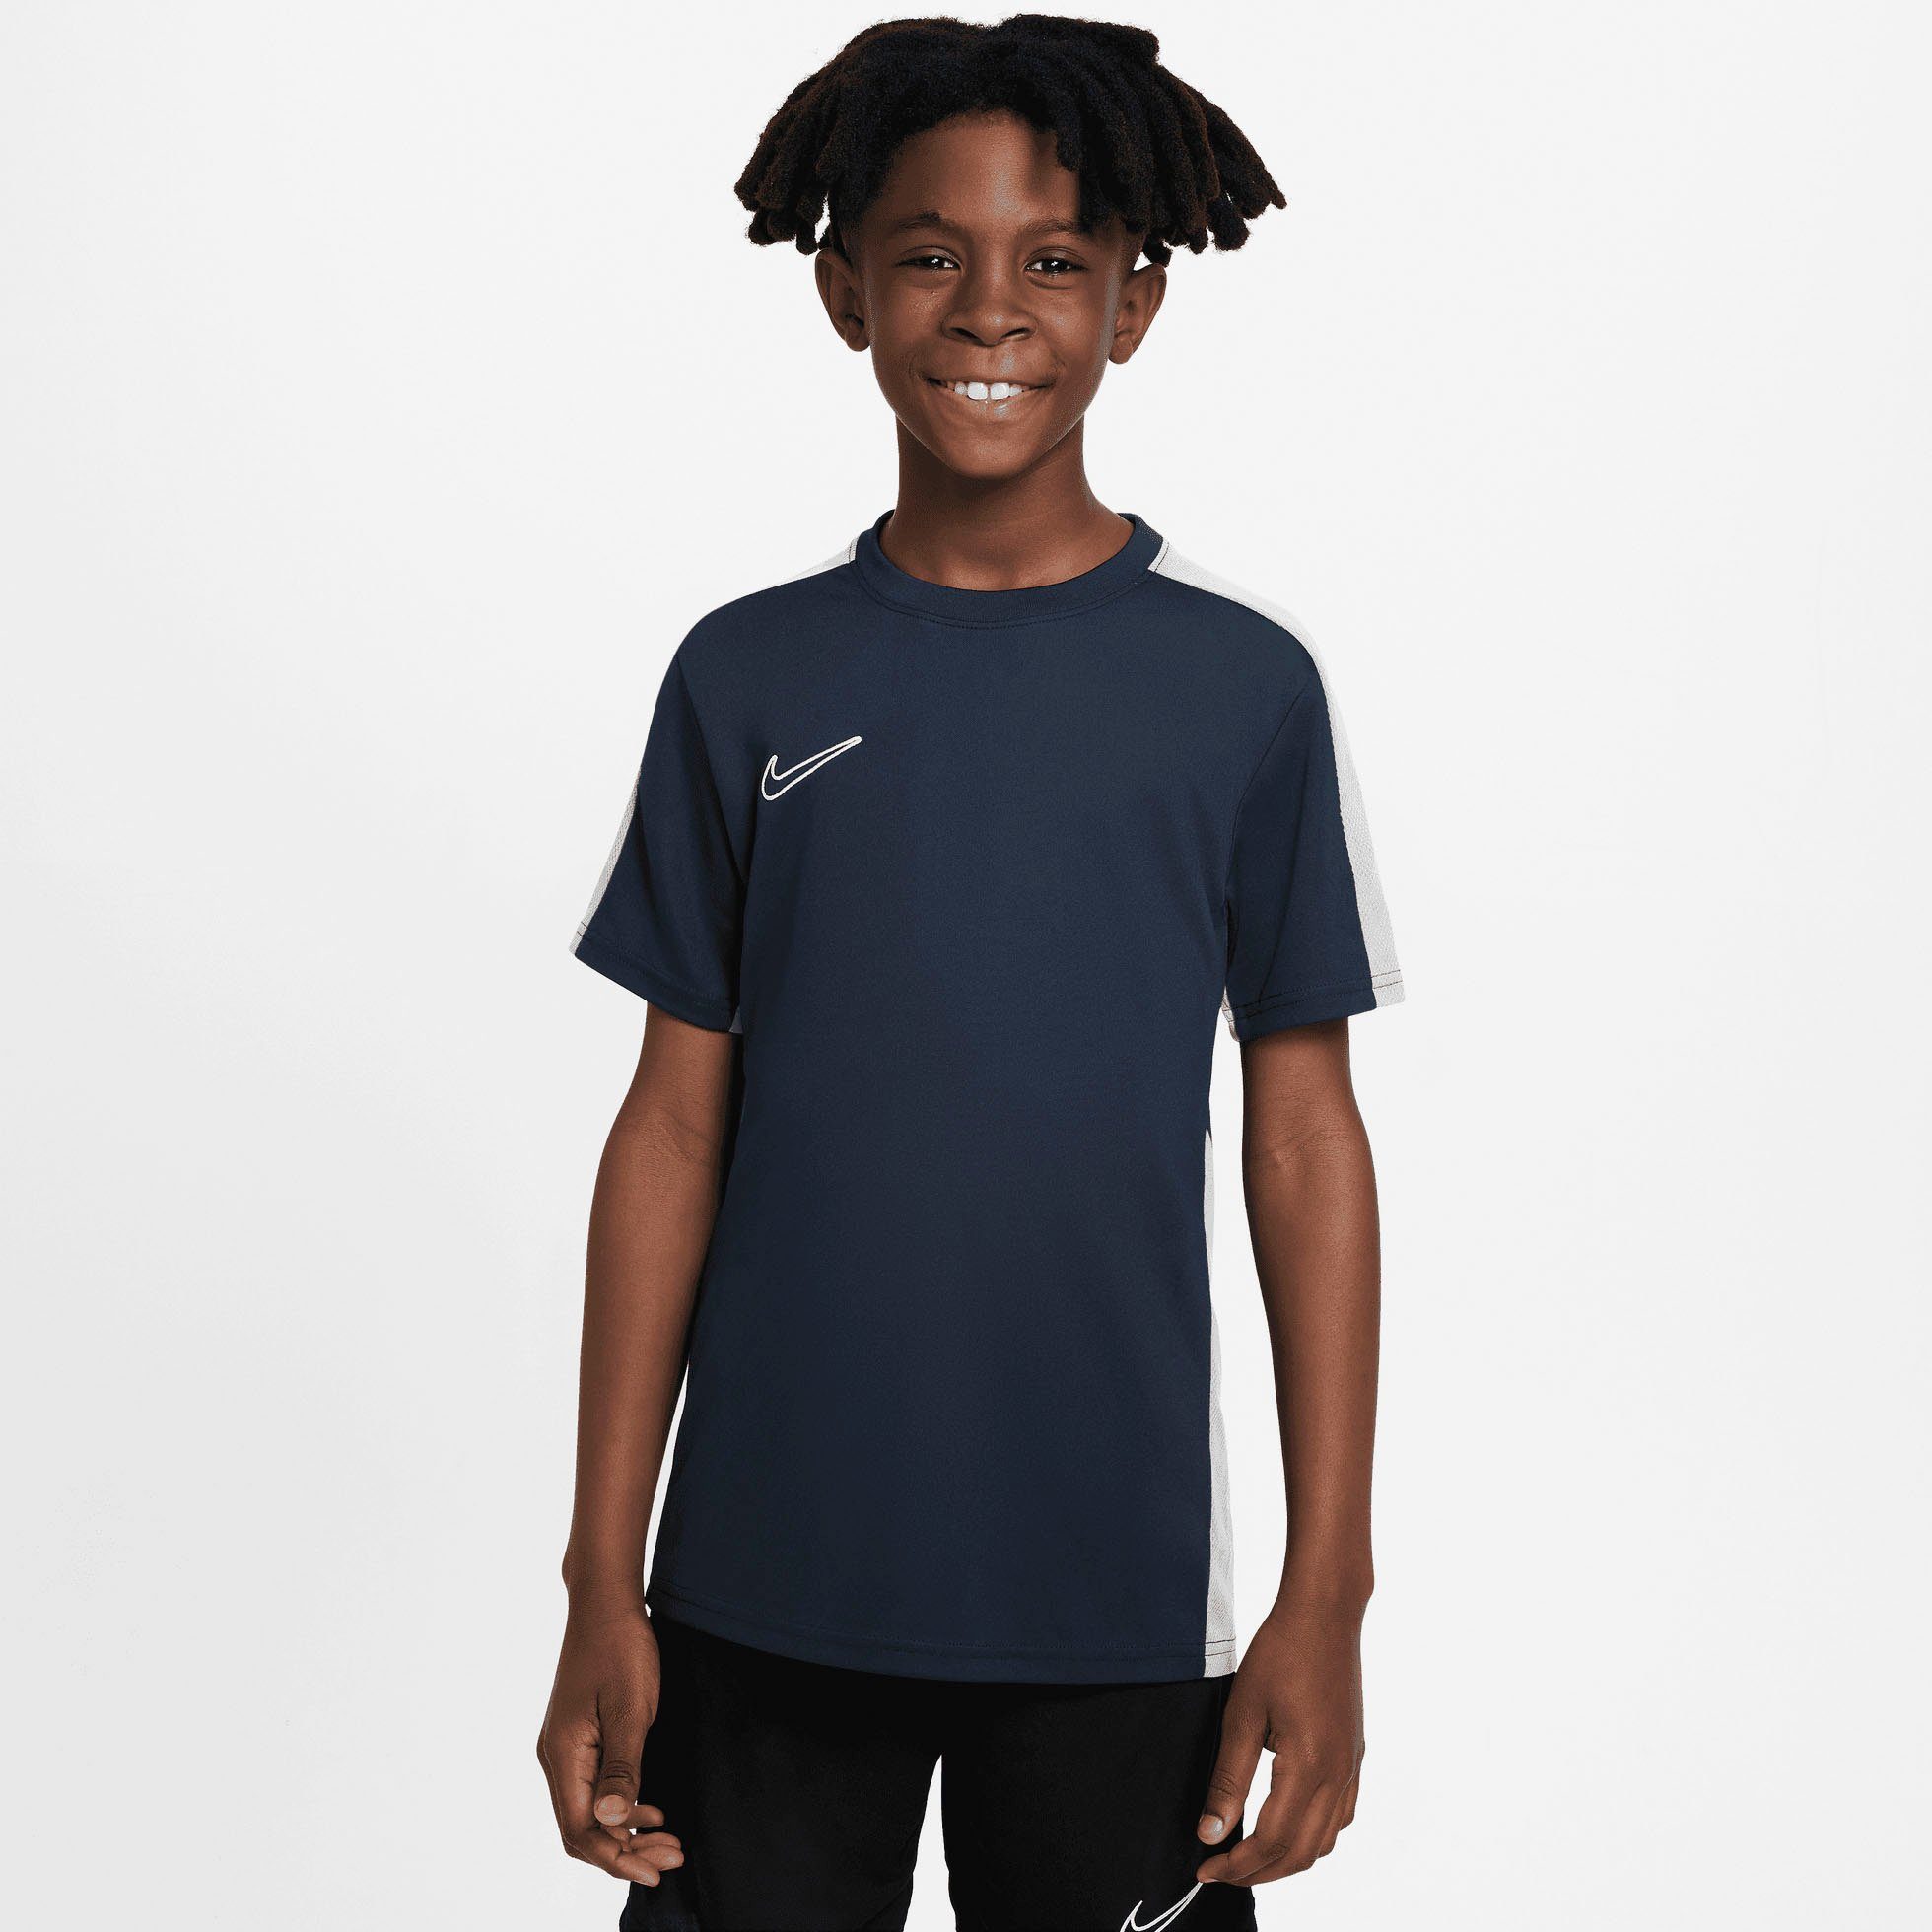 KIDS' Nike ACADEMY OBSIDIAN/WHITE/WHITE Trainingsshirt TOP DRI-FIT